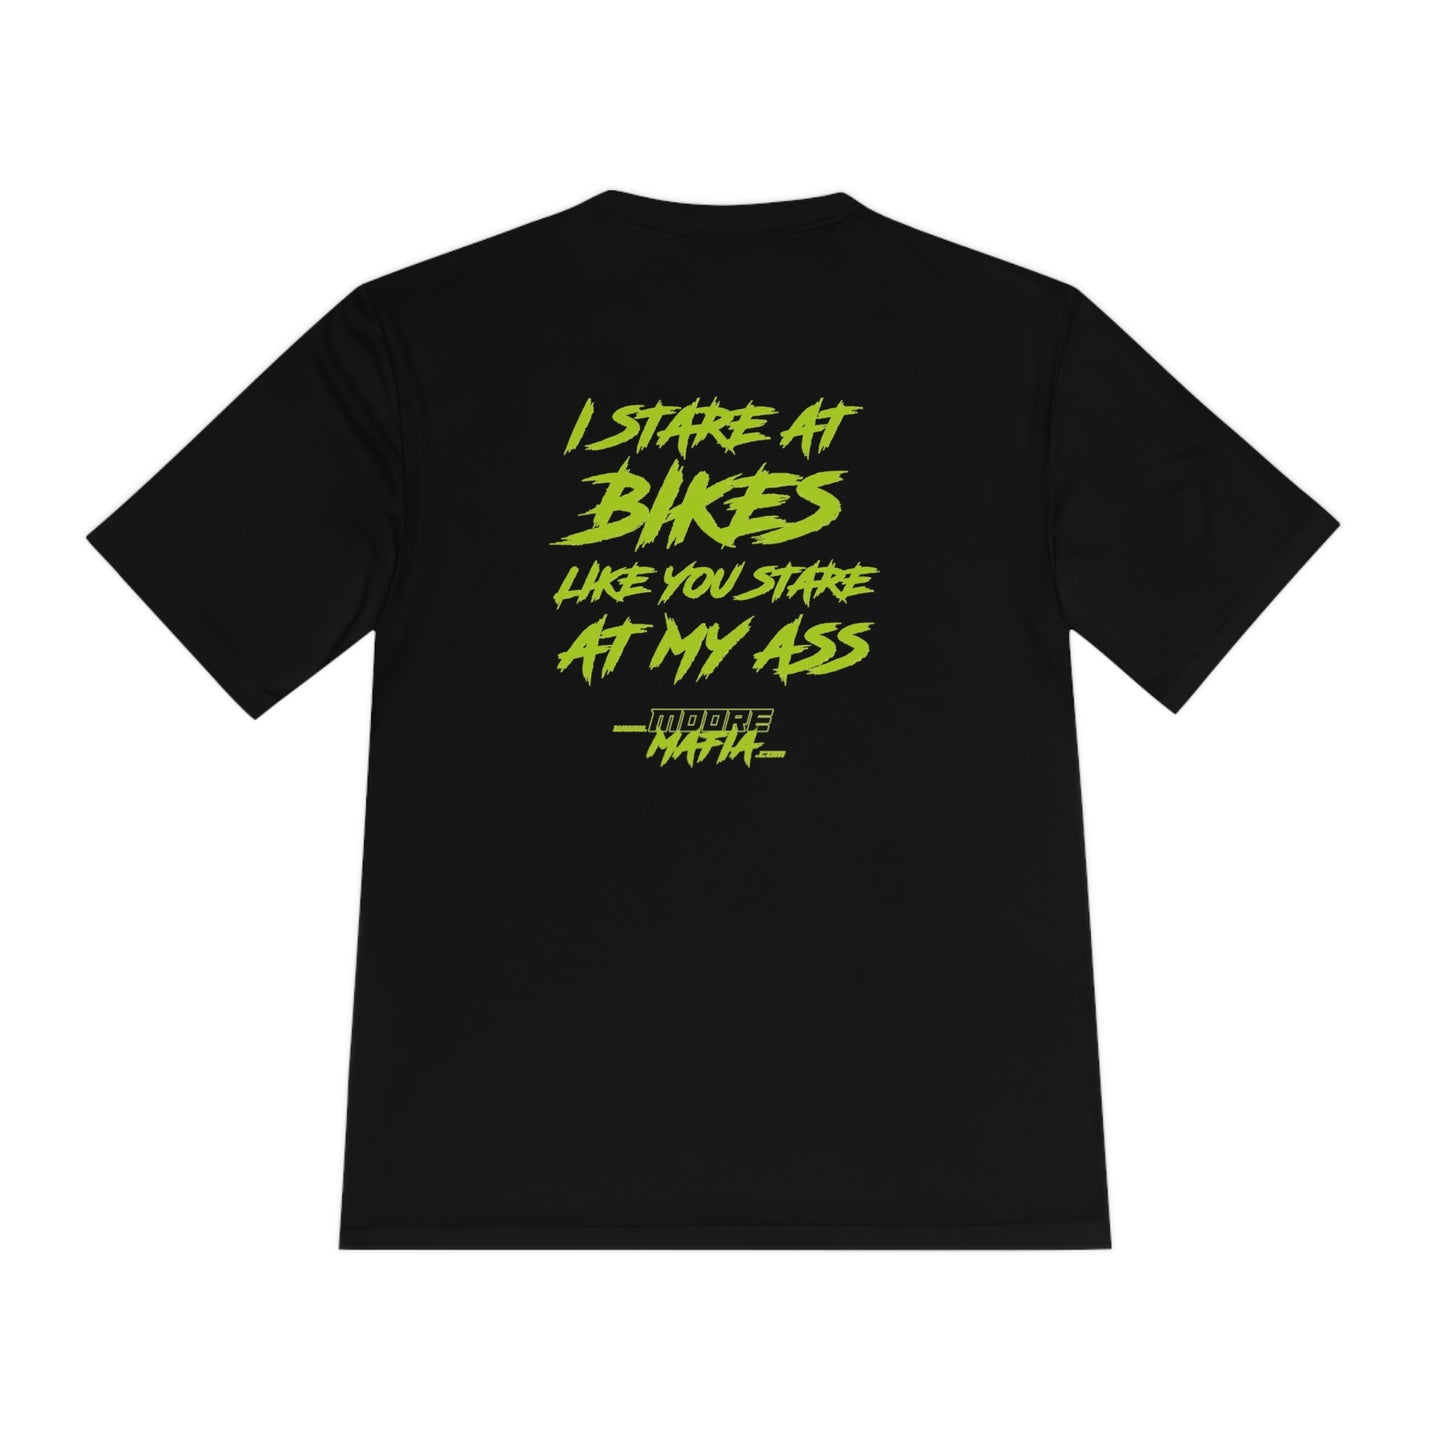 I Stare At Bikes Unisex Moisture Wicking T-Shirt